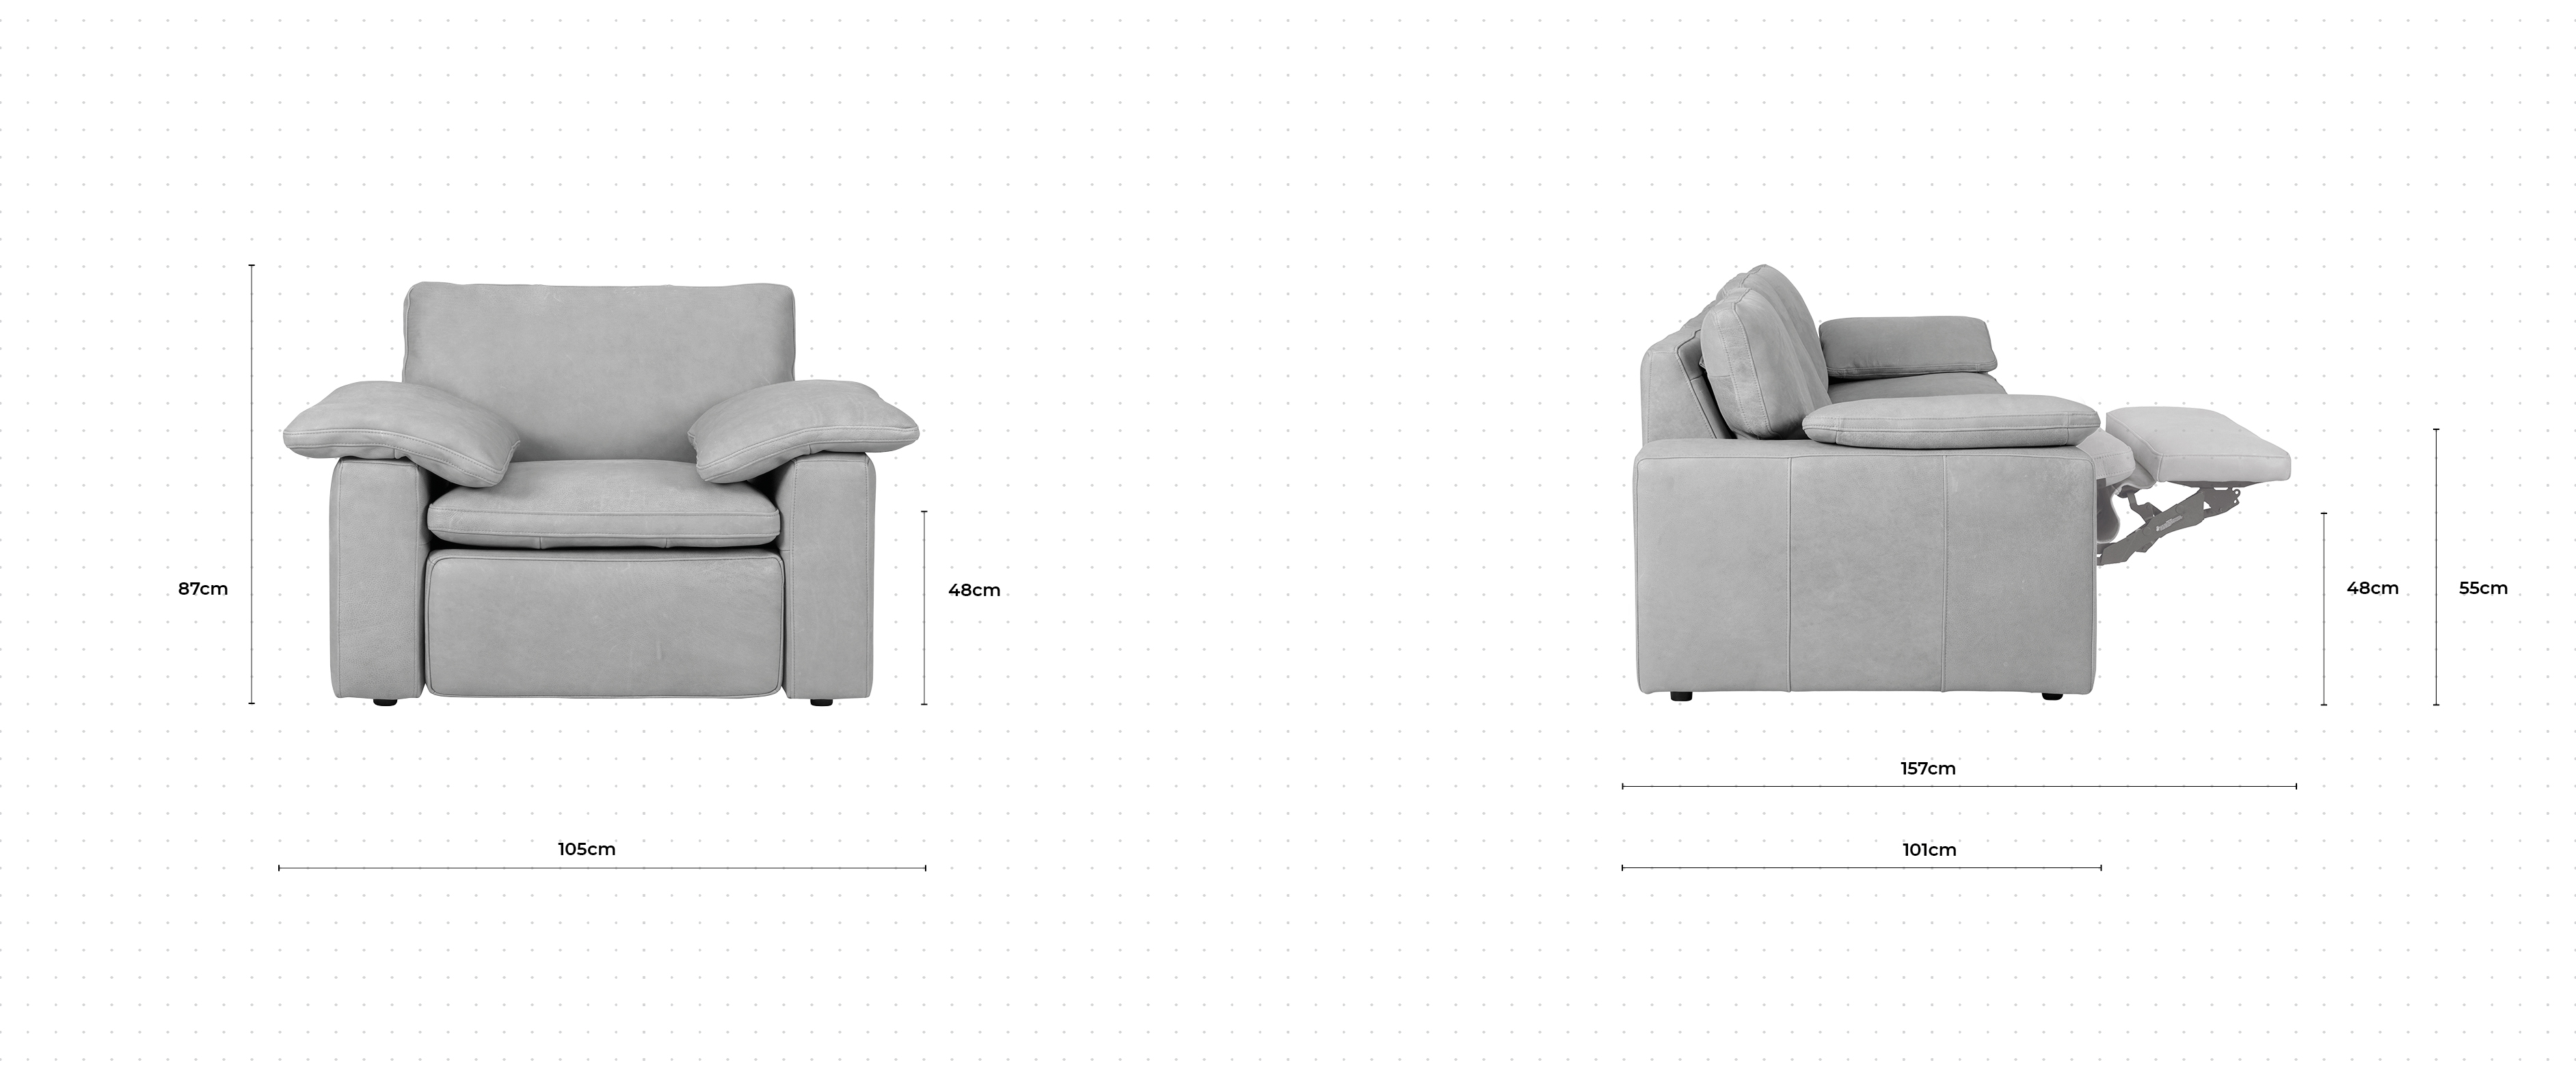 Martin Recliner Armchair dimensions